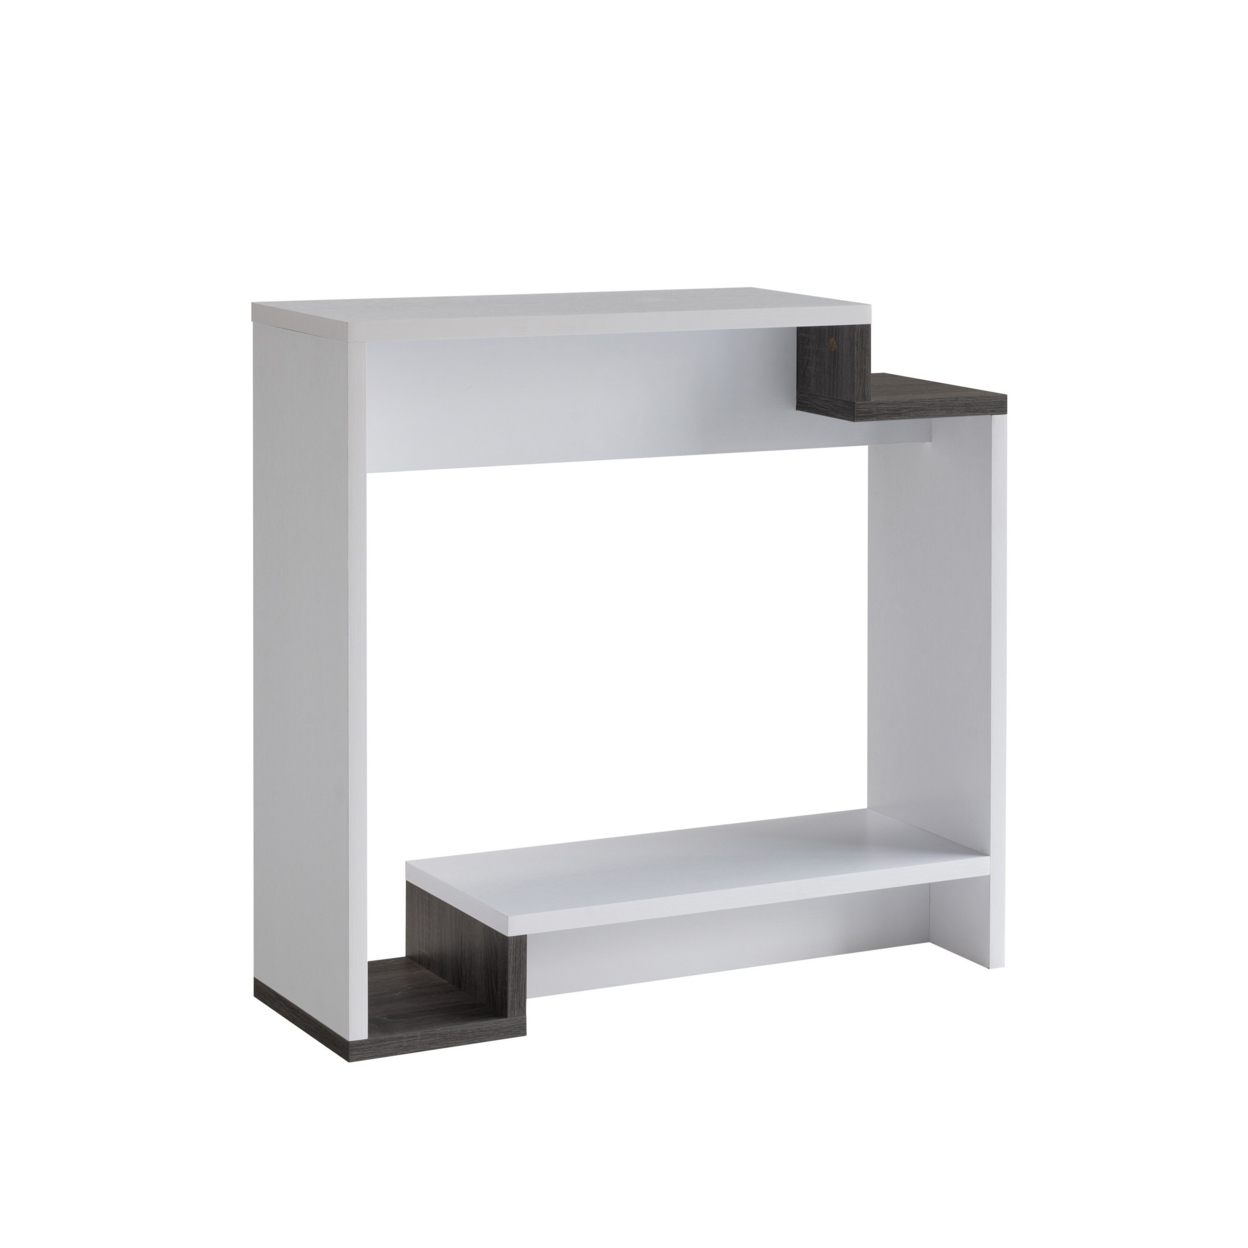 36 Inch Modern Console Table, Multilevel Wood Shelves, Gray And White- Saltoro Sherpi